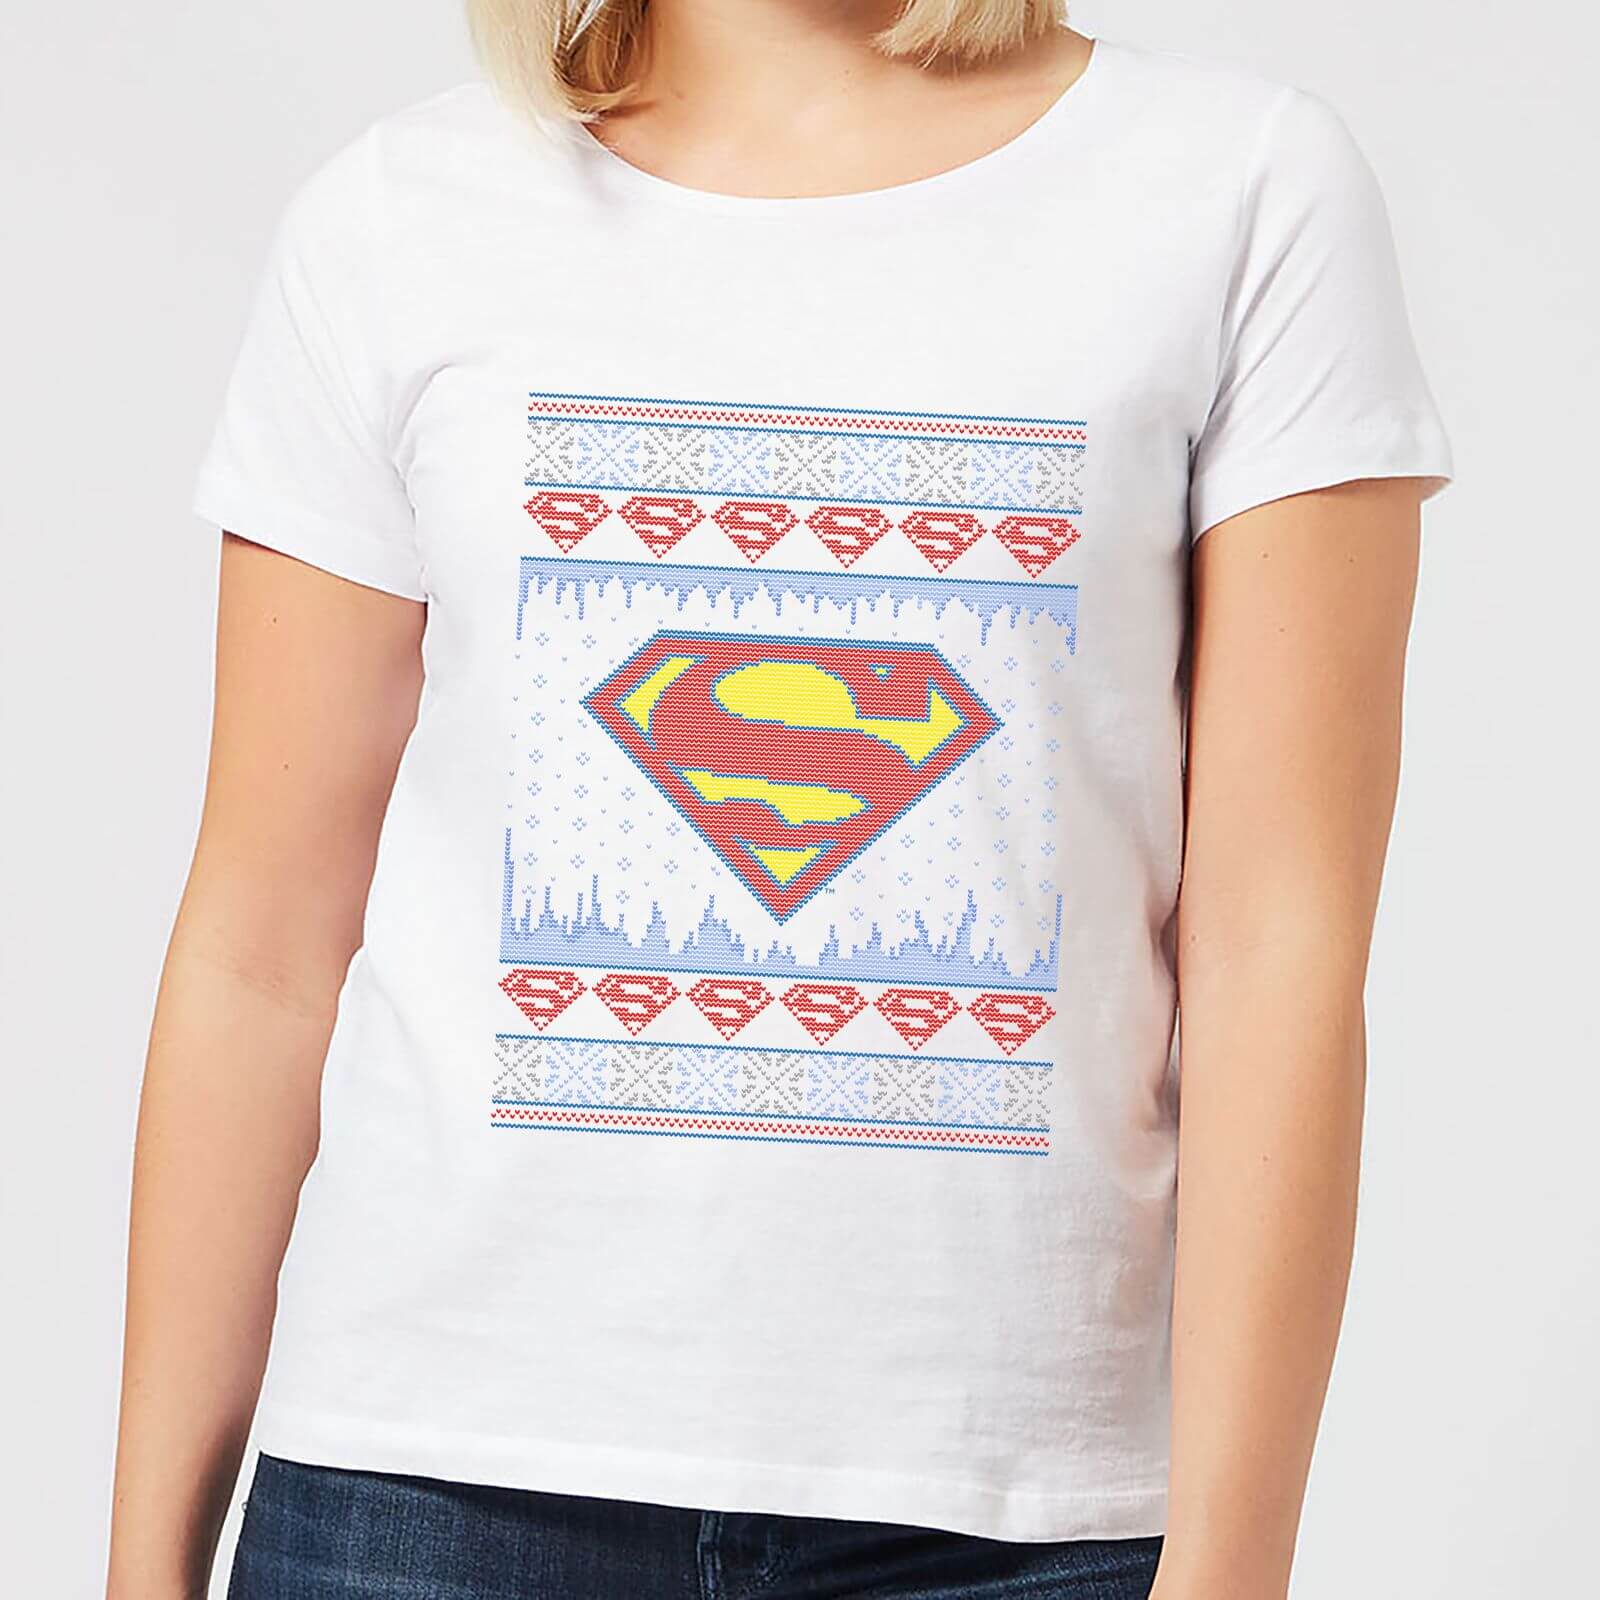 Dc Comics Dc supergirl knit women's christmas t-shirt - white - xl - white